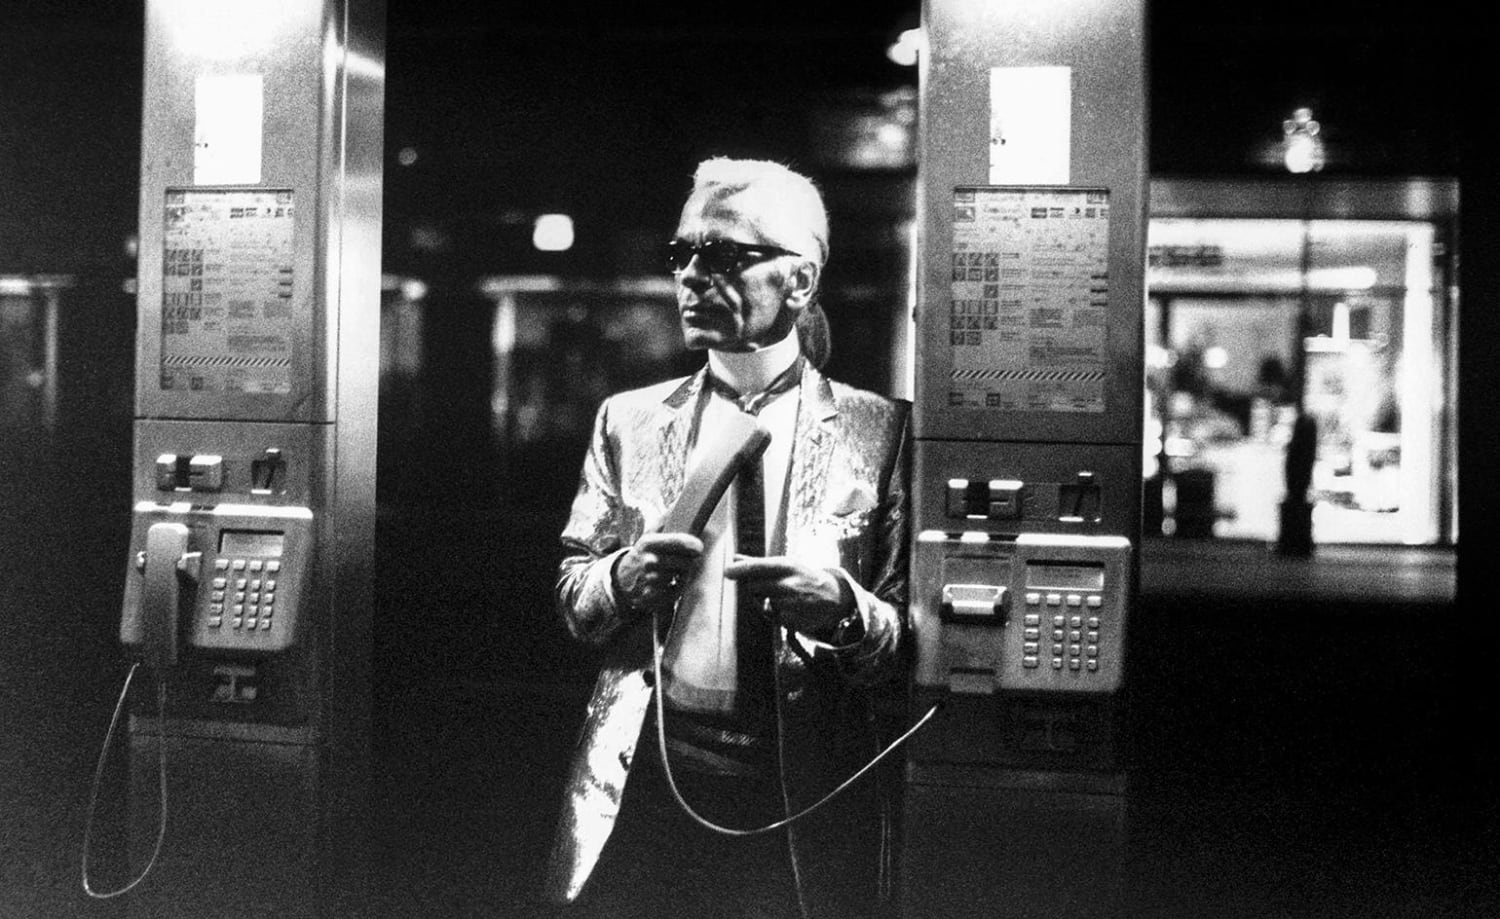 Unseen nighttime portraits of Karl Lagerfeld showcased in Berlin